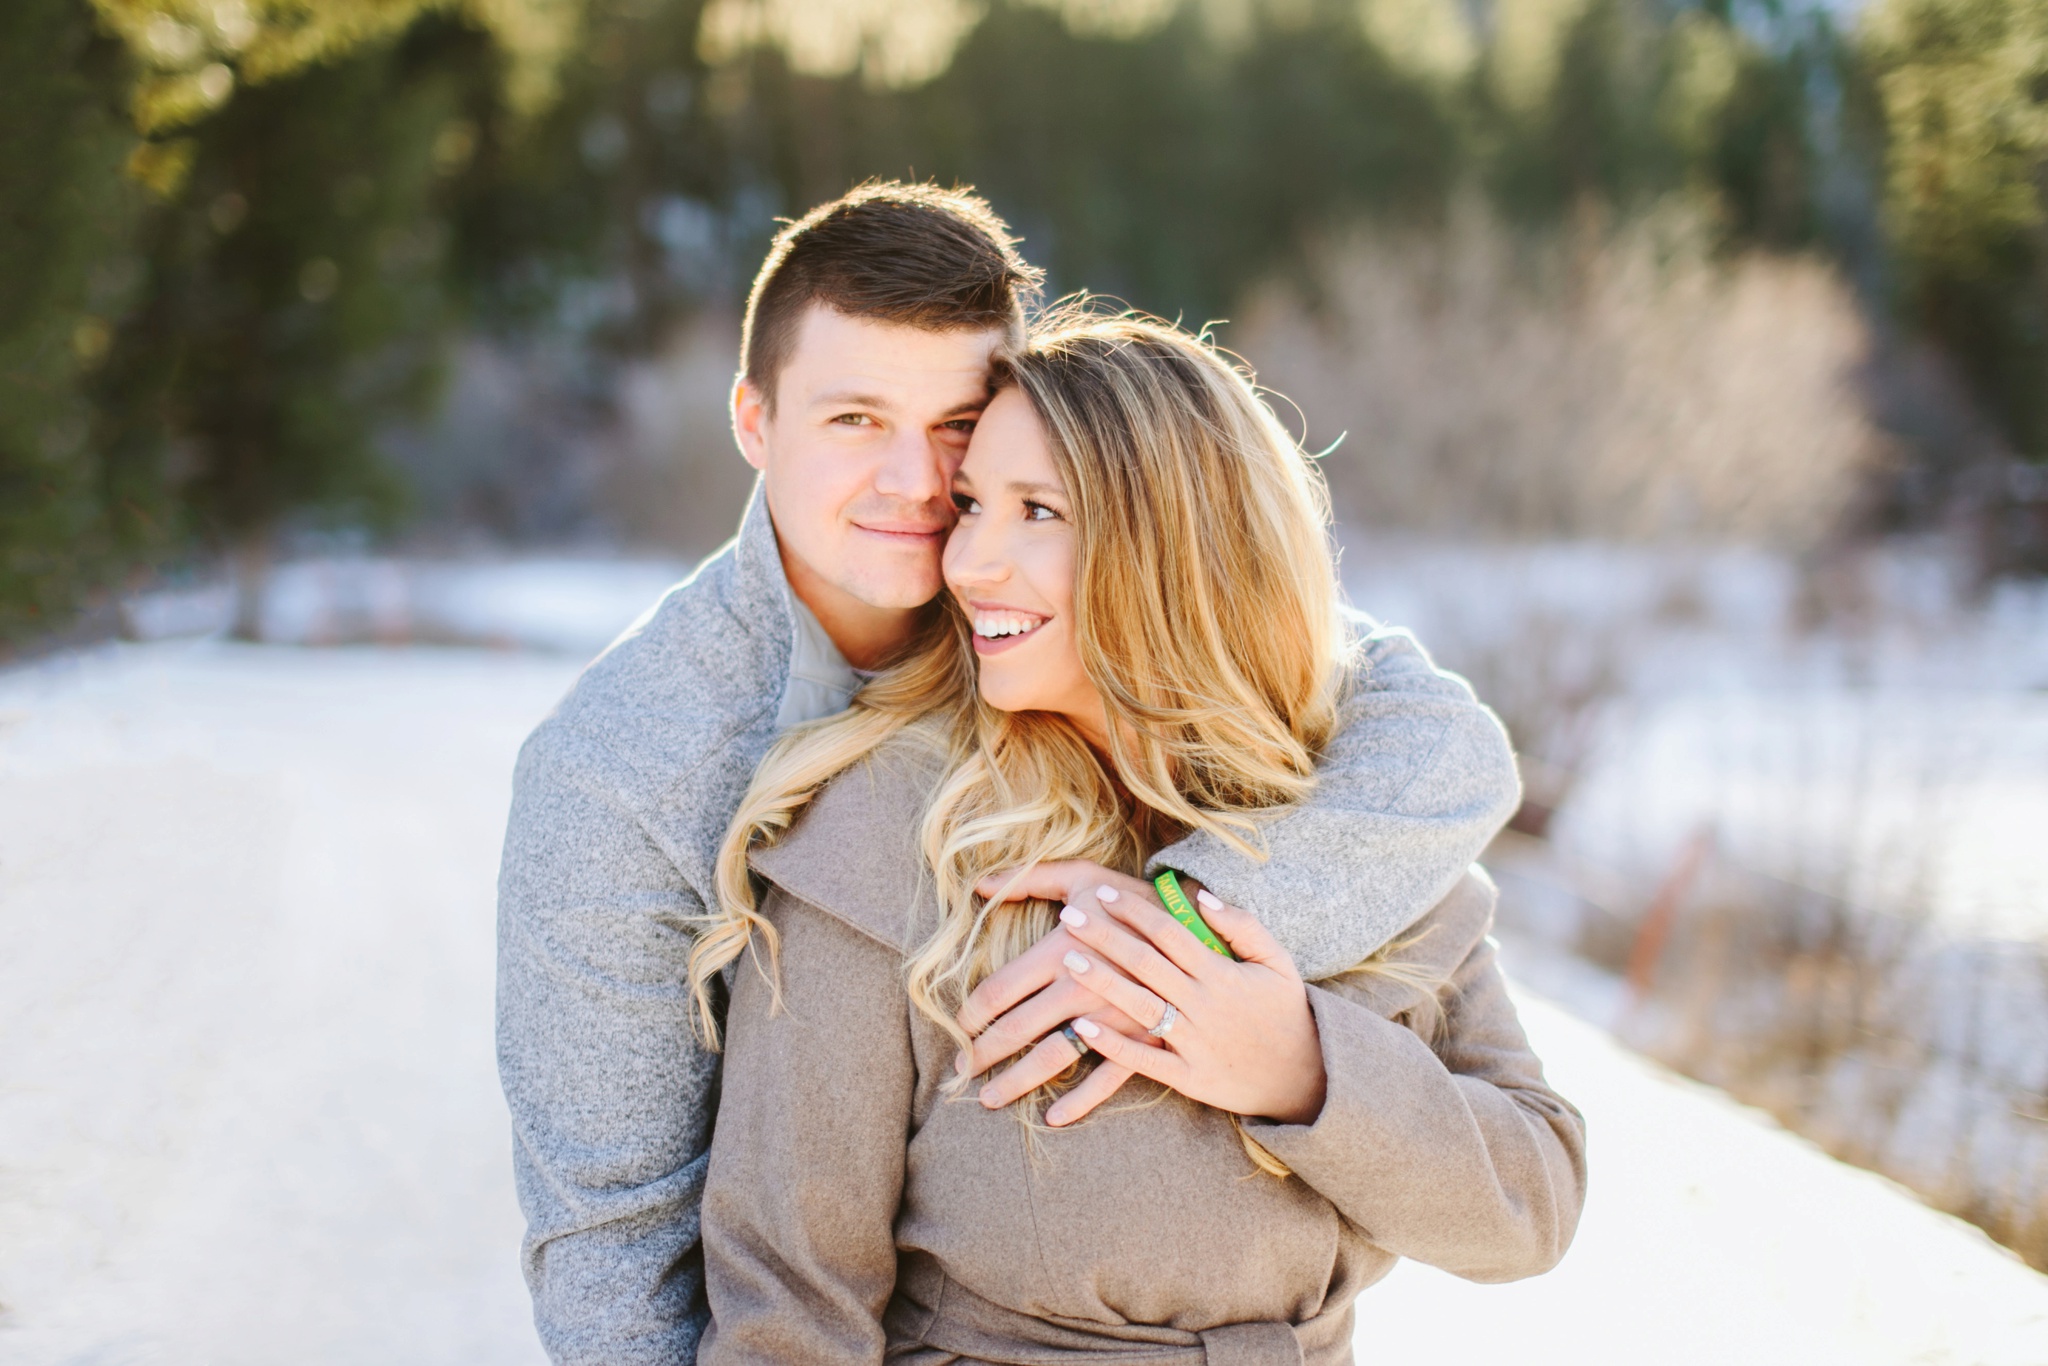 Missoula MT Winter Wonderland Engagement Photos Couple Hugging